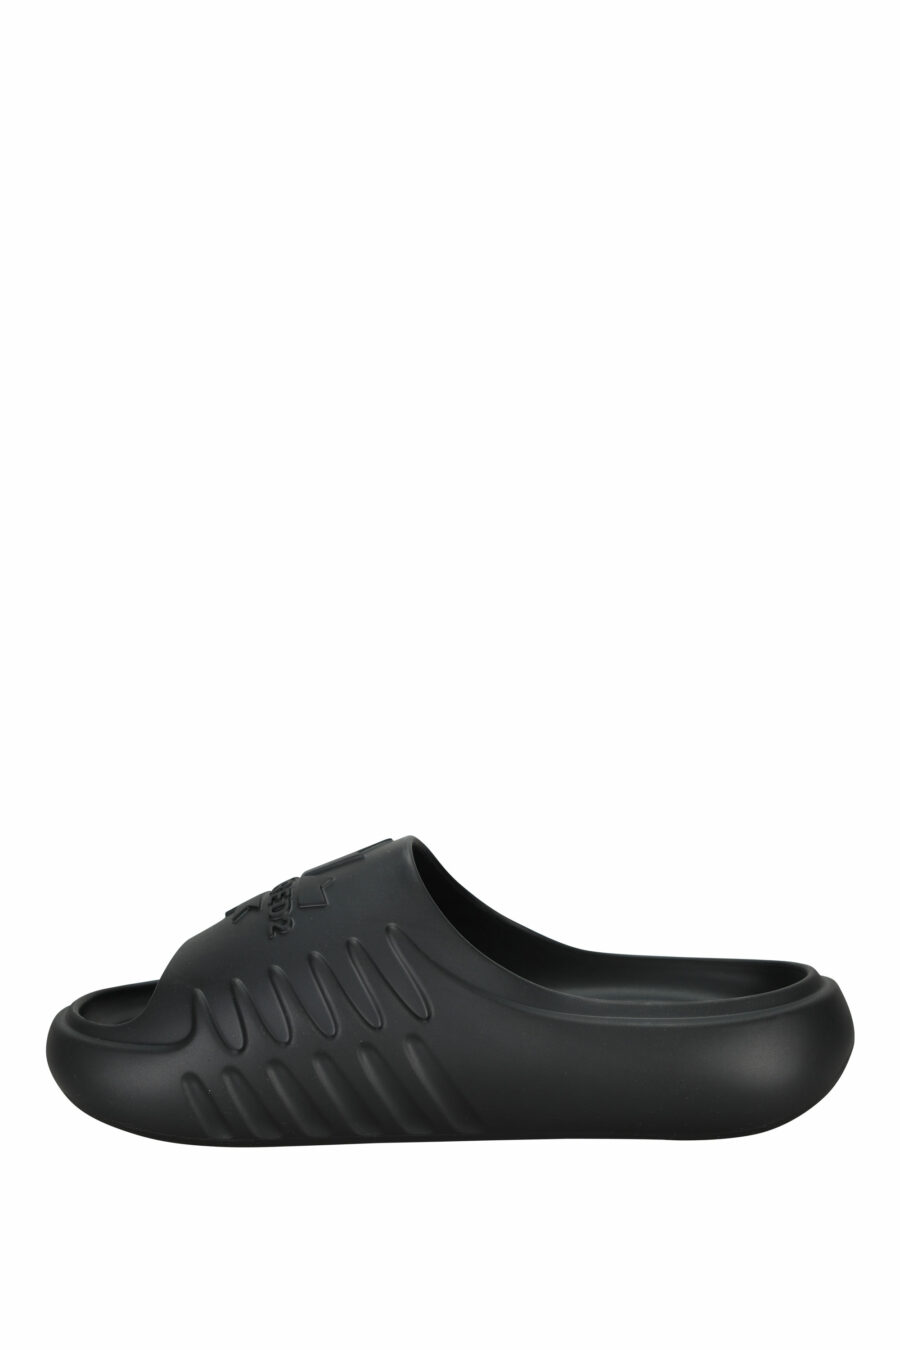 Black rubber flip flops with monochrome logo - 8055777295403 2